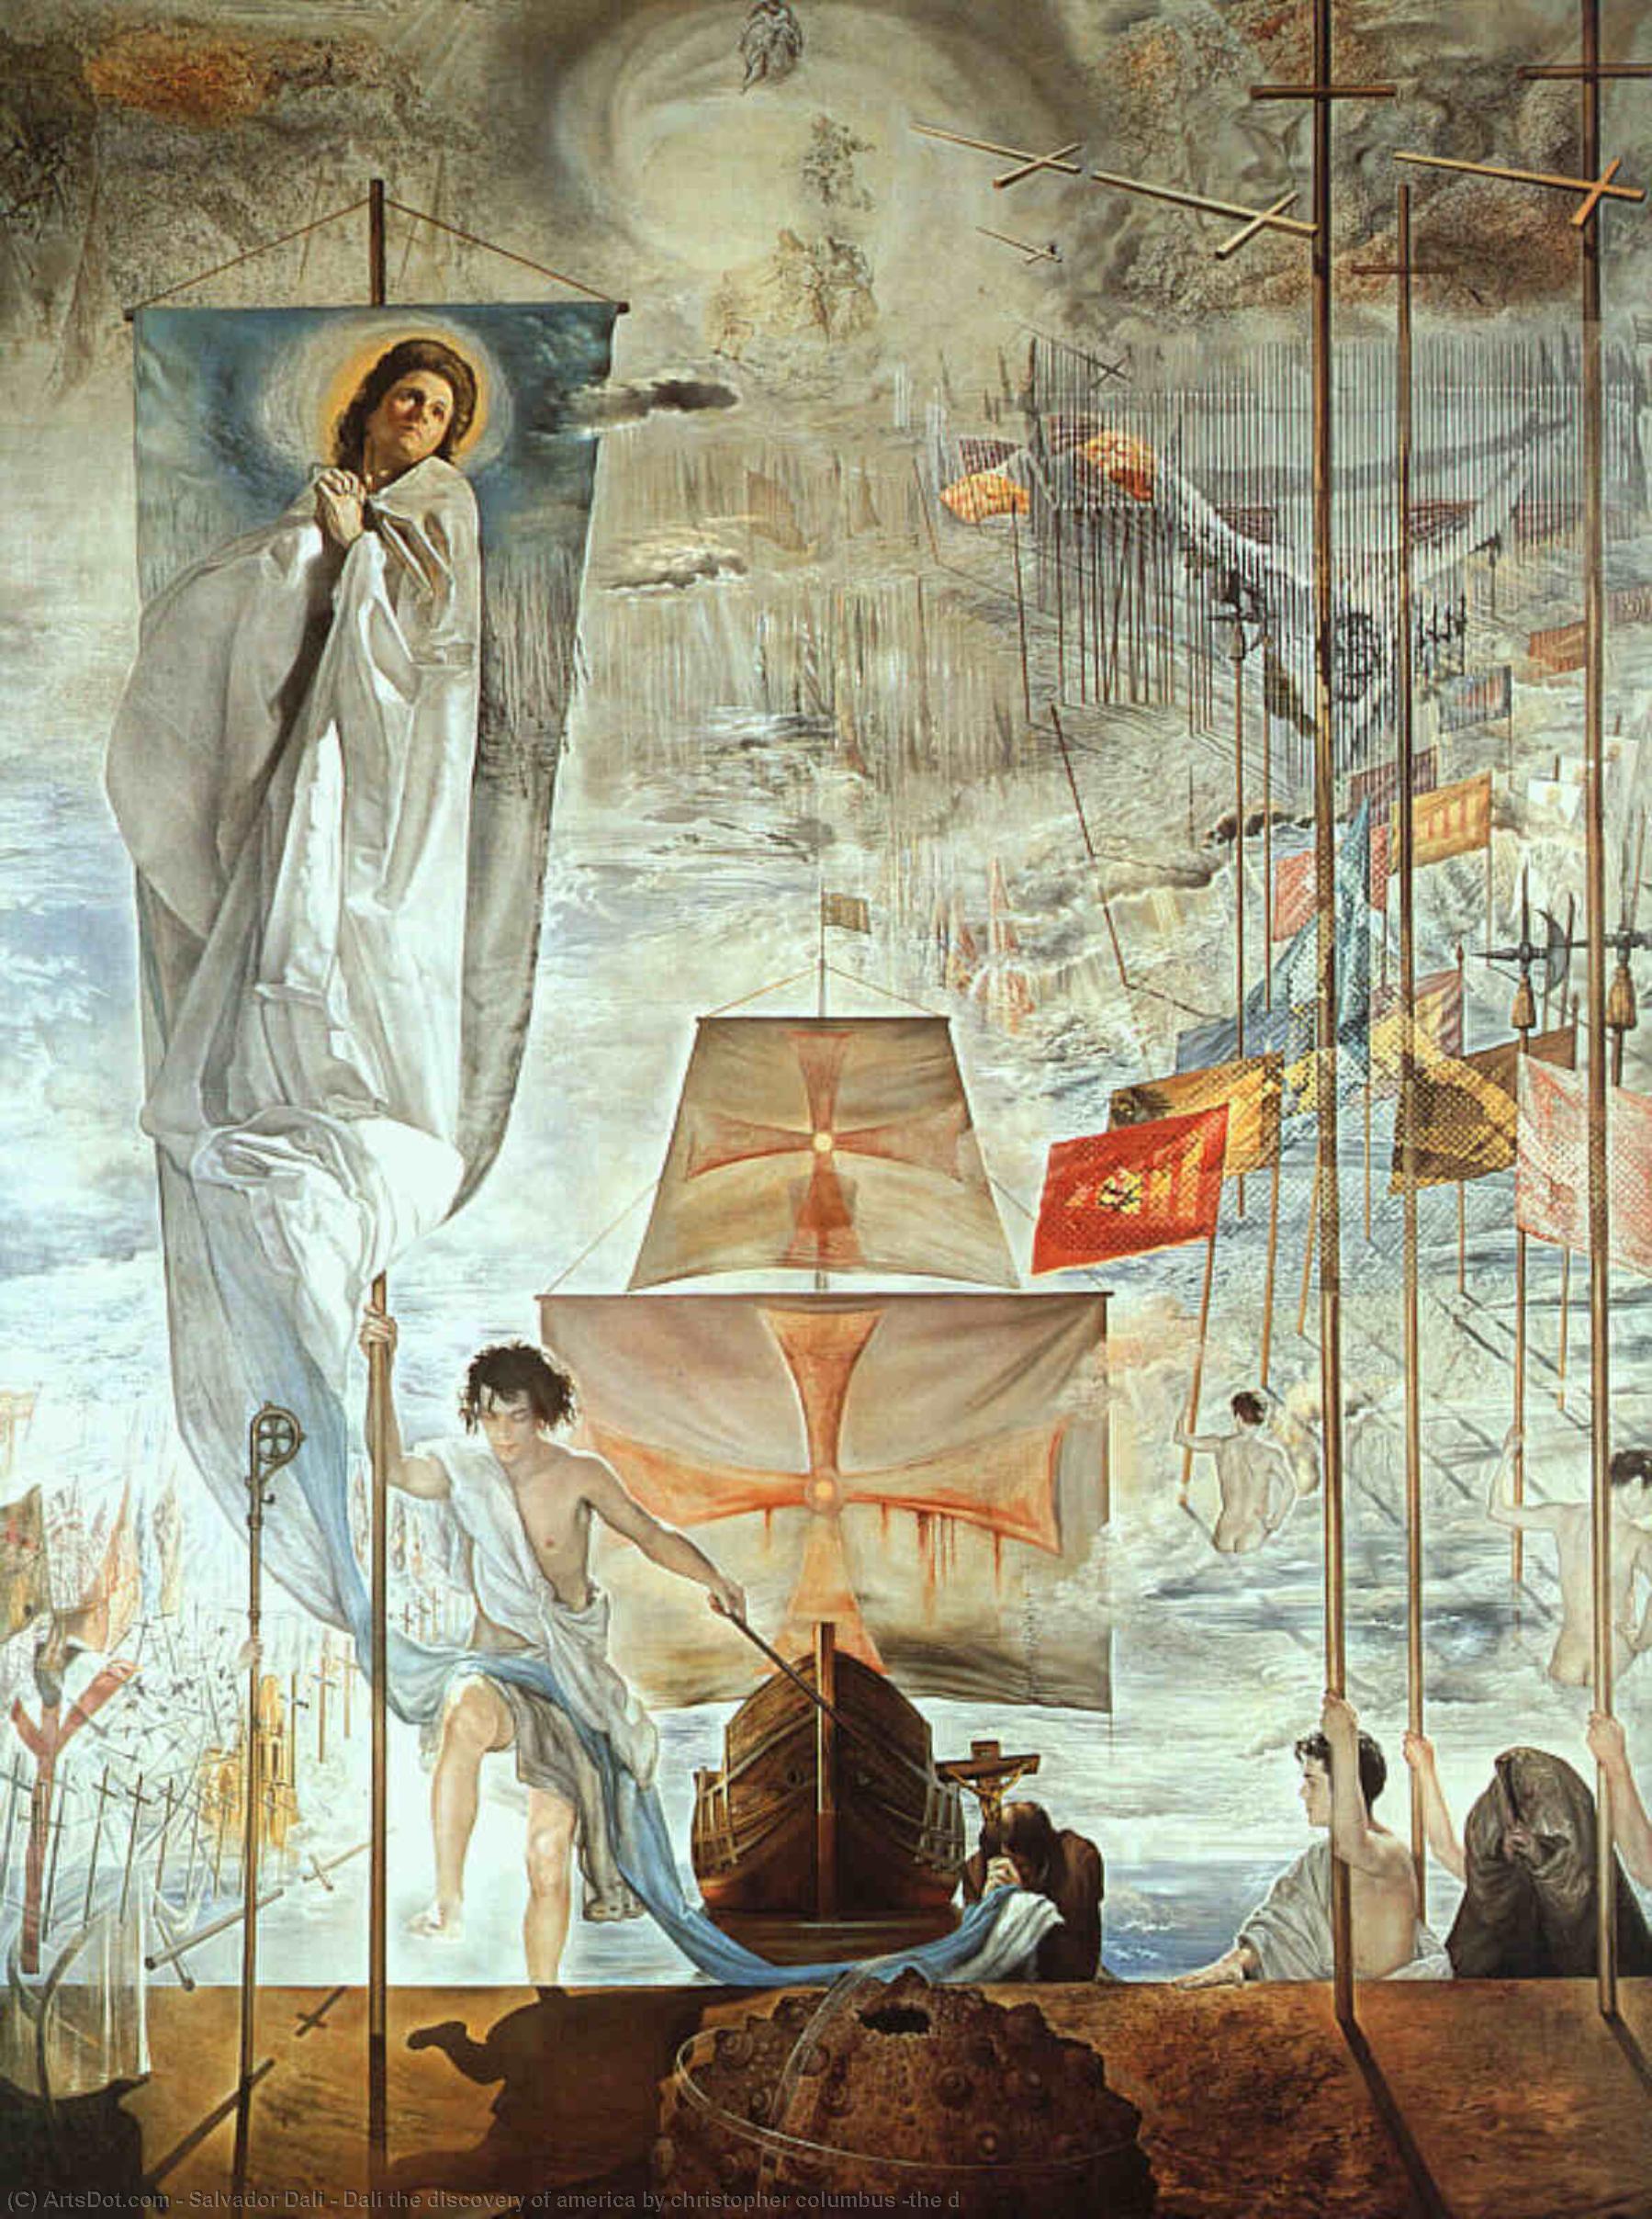 WikiOO.org - دایره المعارف هنرهای زیبا - نقاشی، آثار هنری Salvador Dali - Dalí the discovery of america by christopher columbus (the d